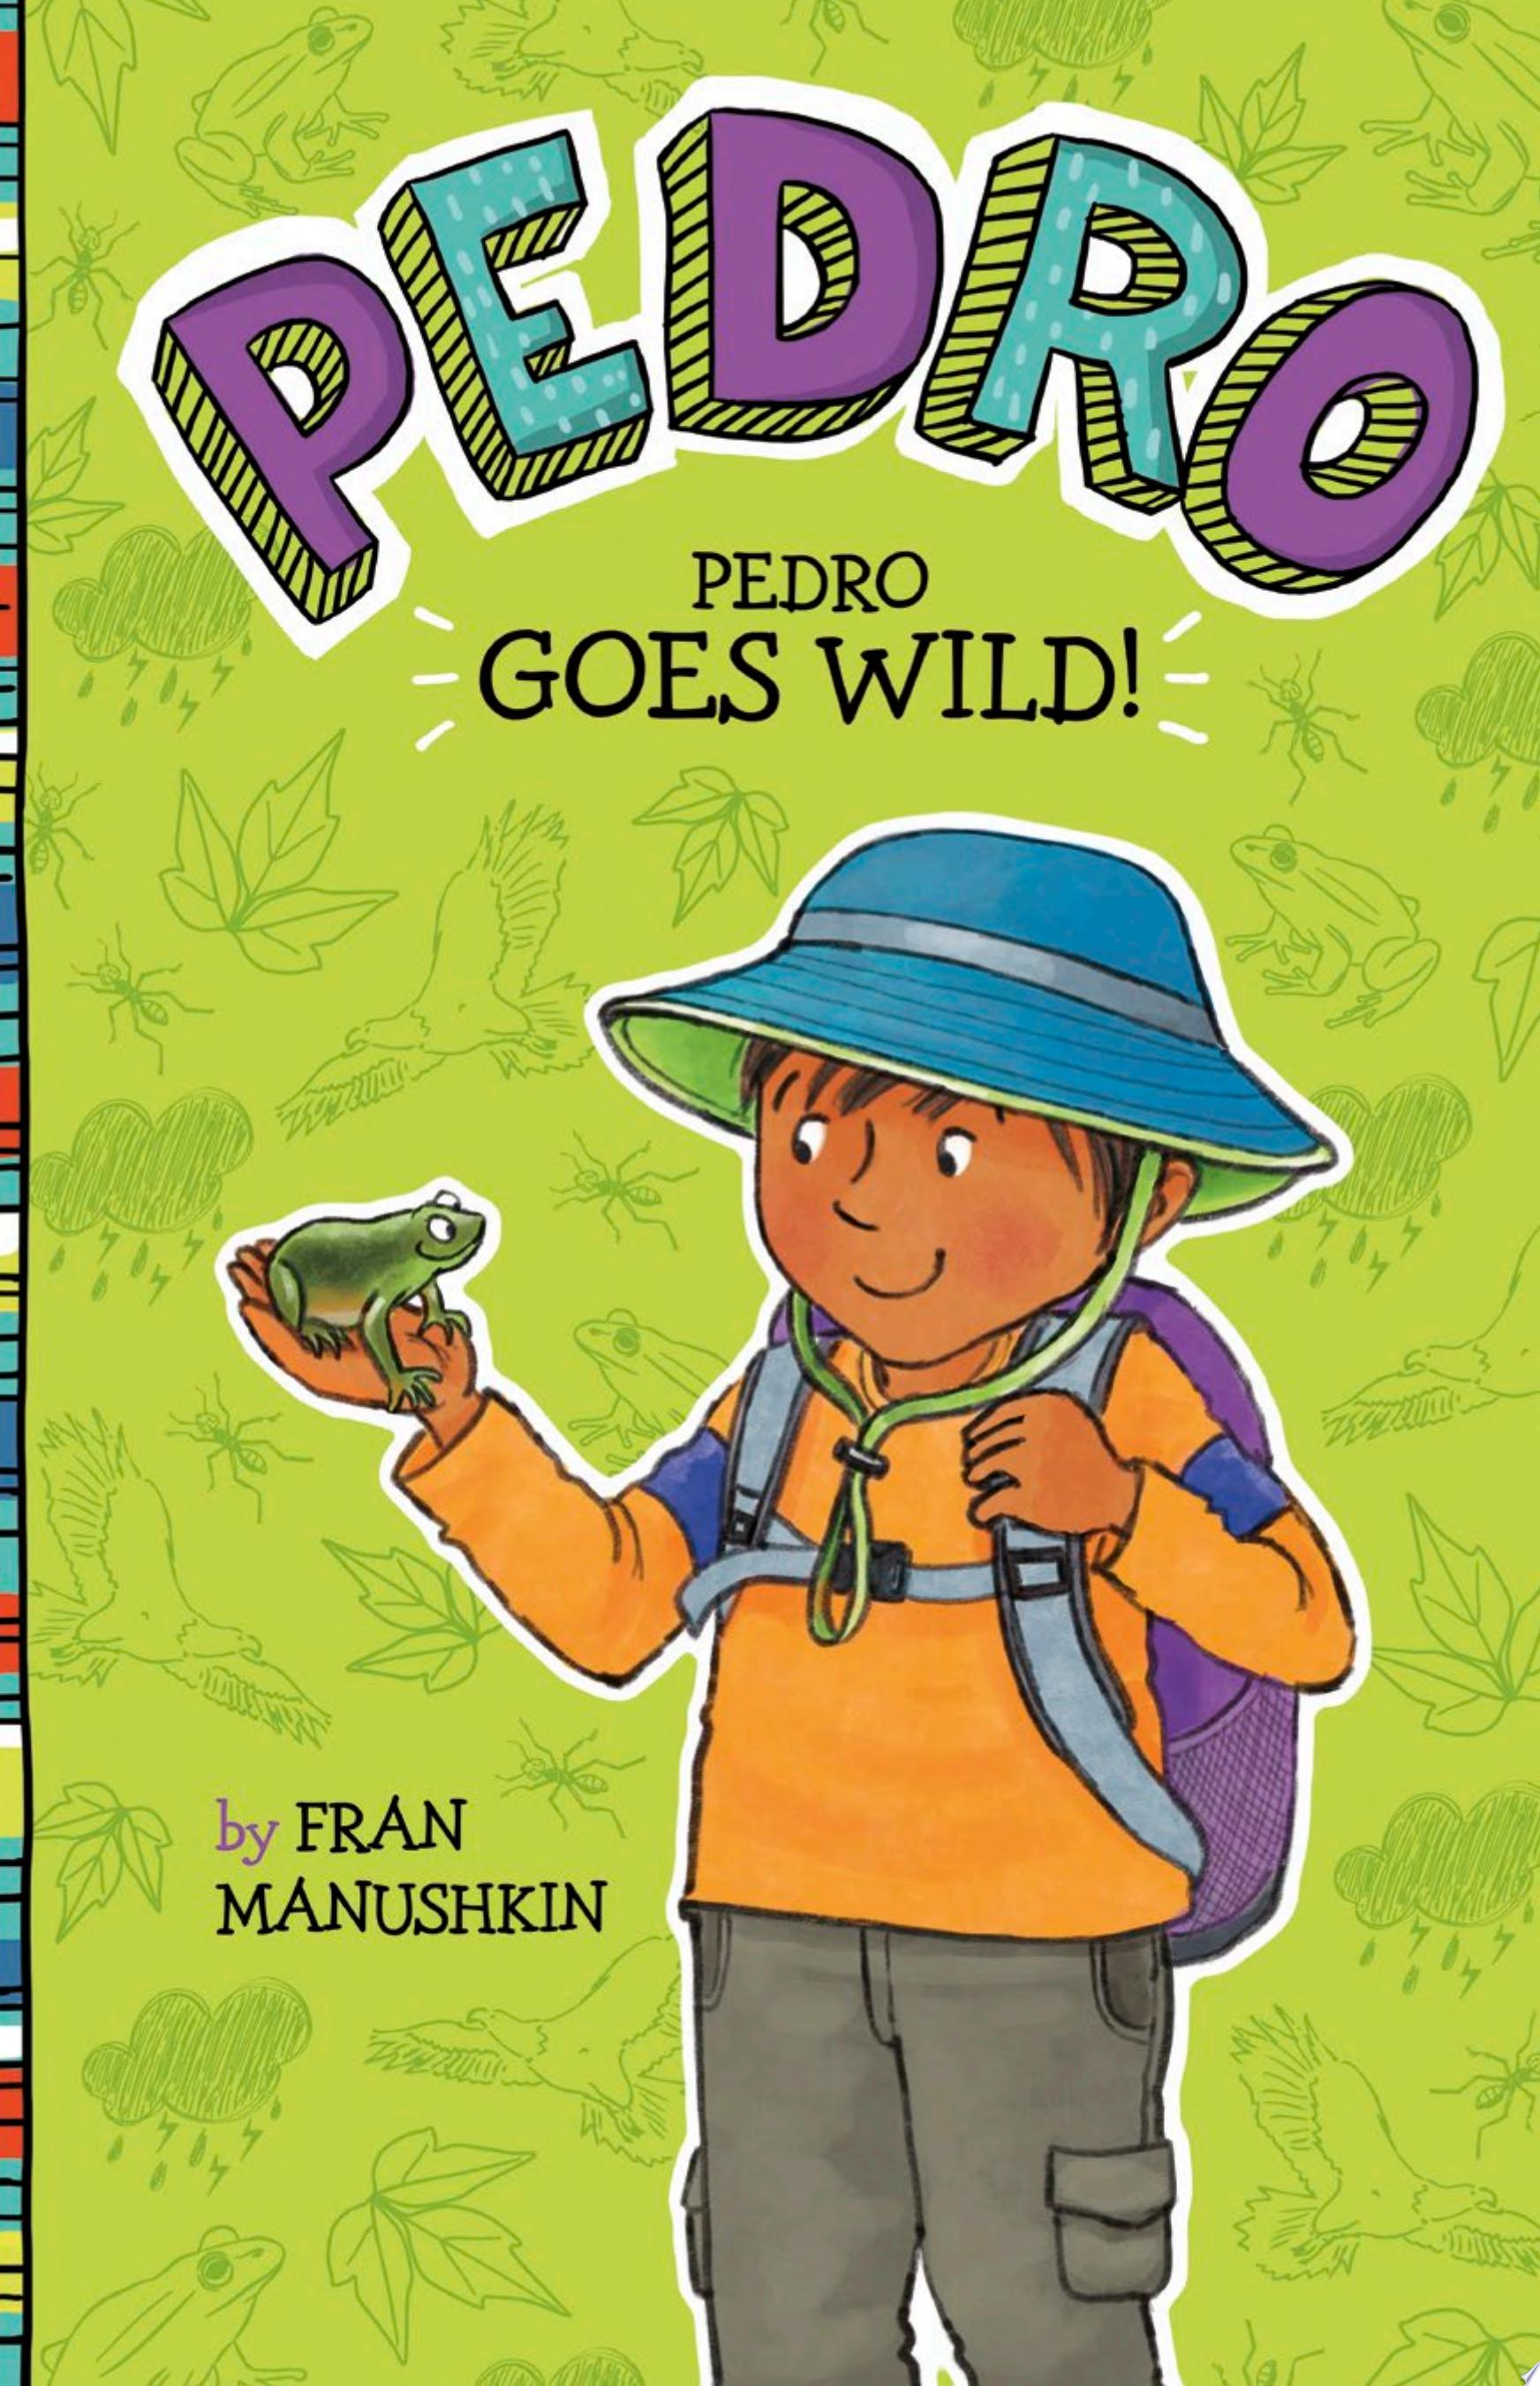 Image for "Pedro Goes Wild!"